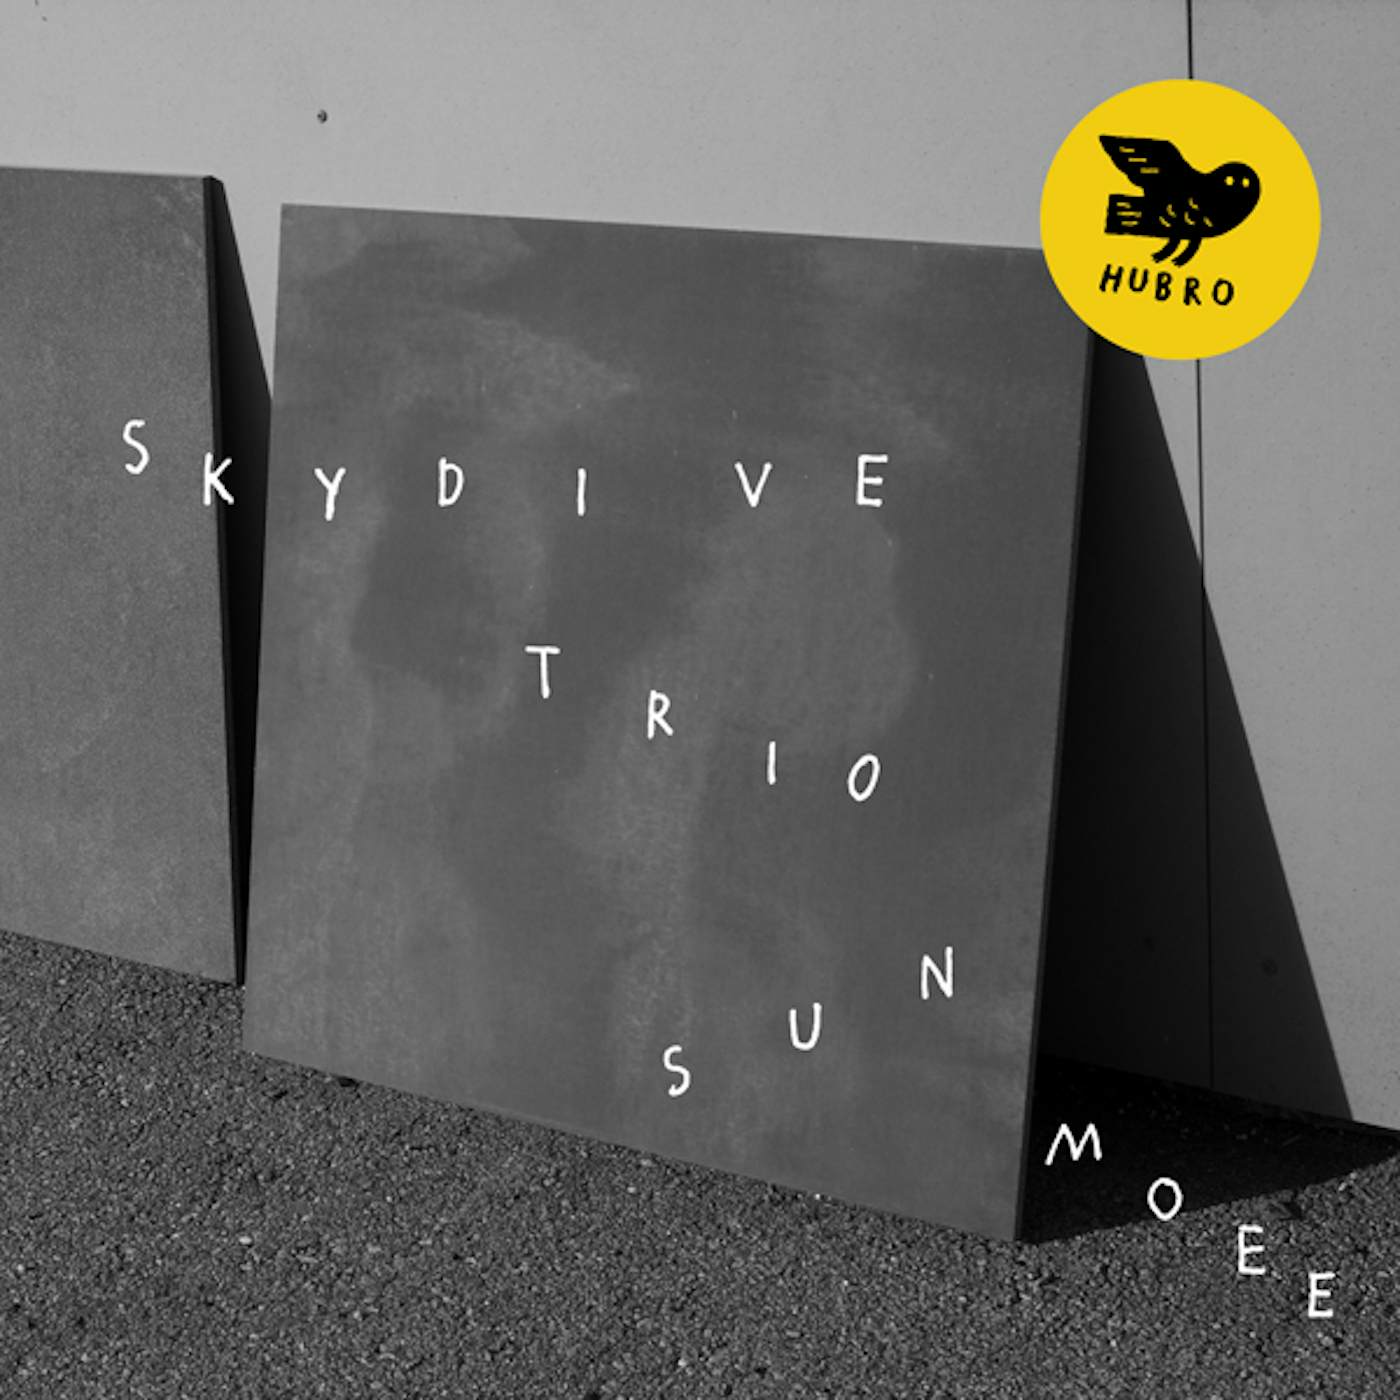 Skydive Trio Sun Moee Vinyl Record